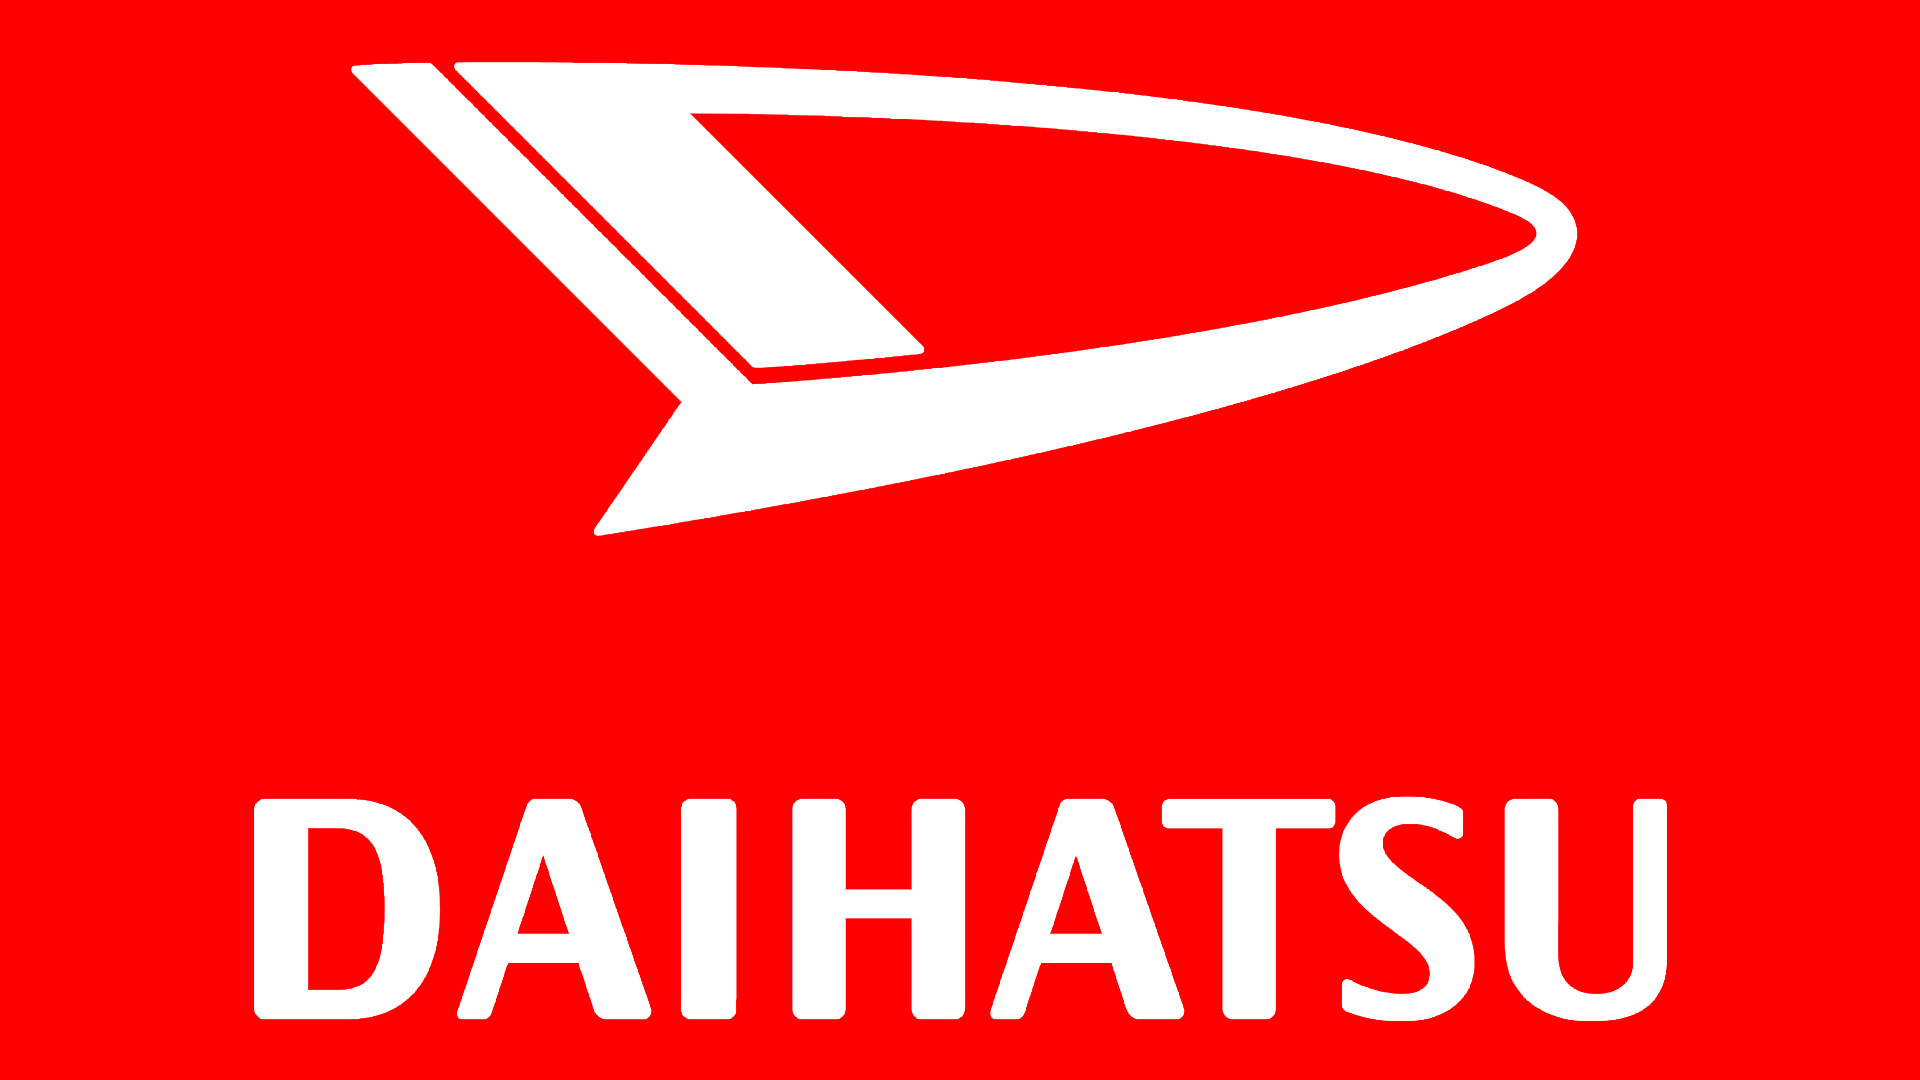  Daihatsu Logo  Meaning and History Daihatsu  symbol 